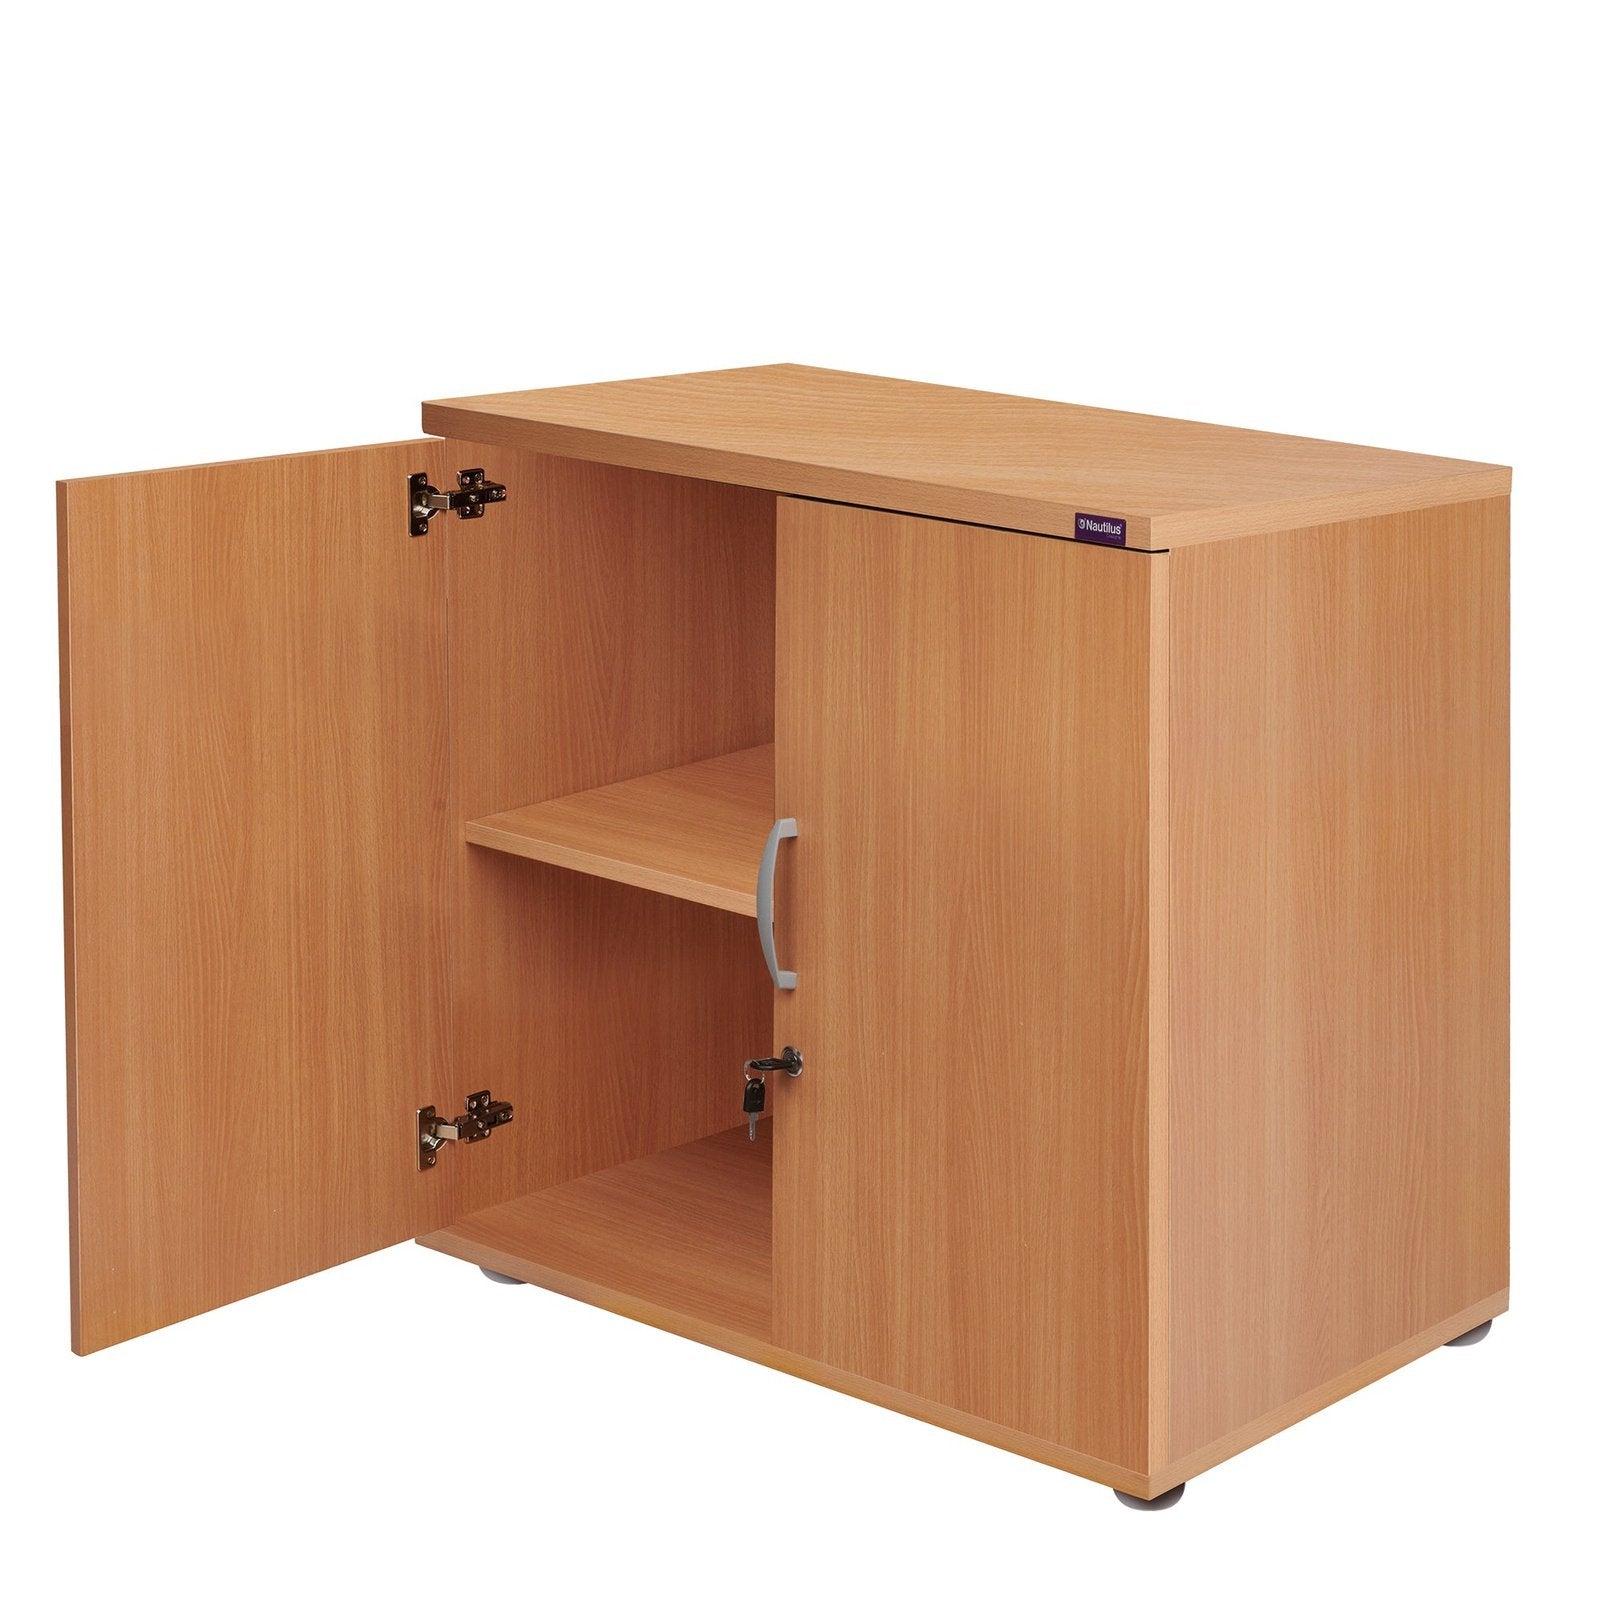 Cupboard 800mm - 1 Shelf - Office Products Online